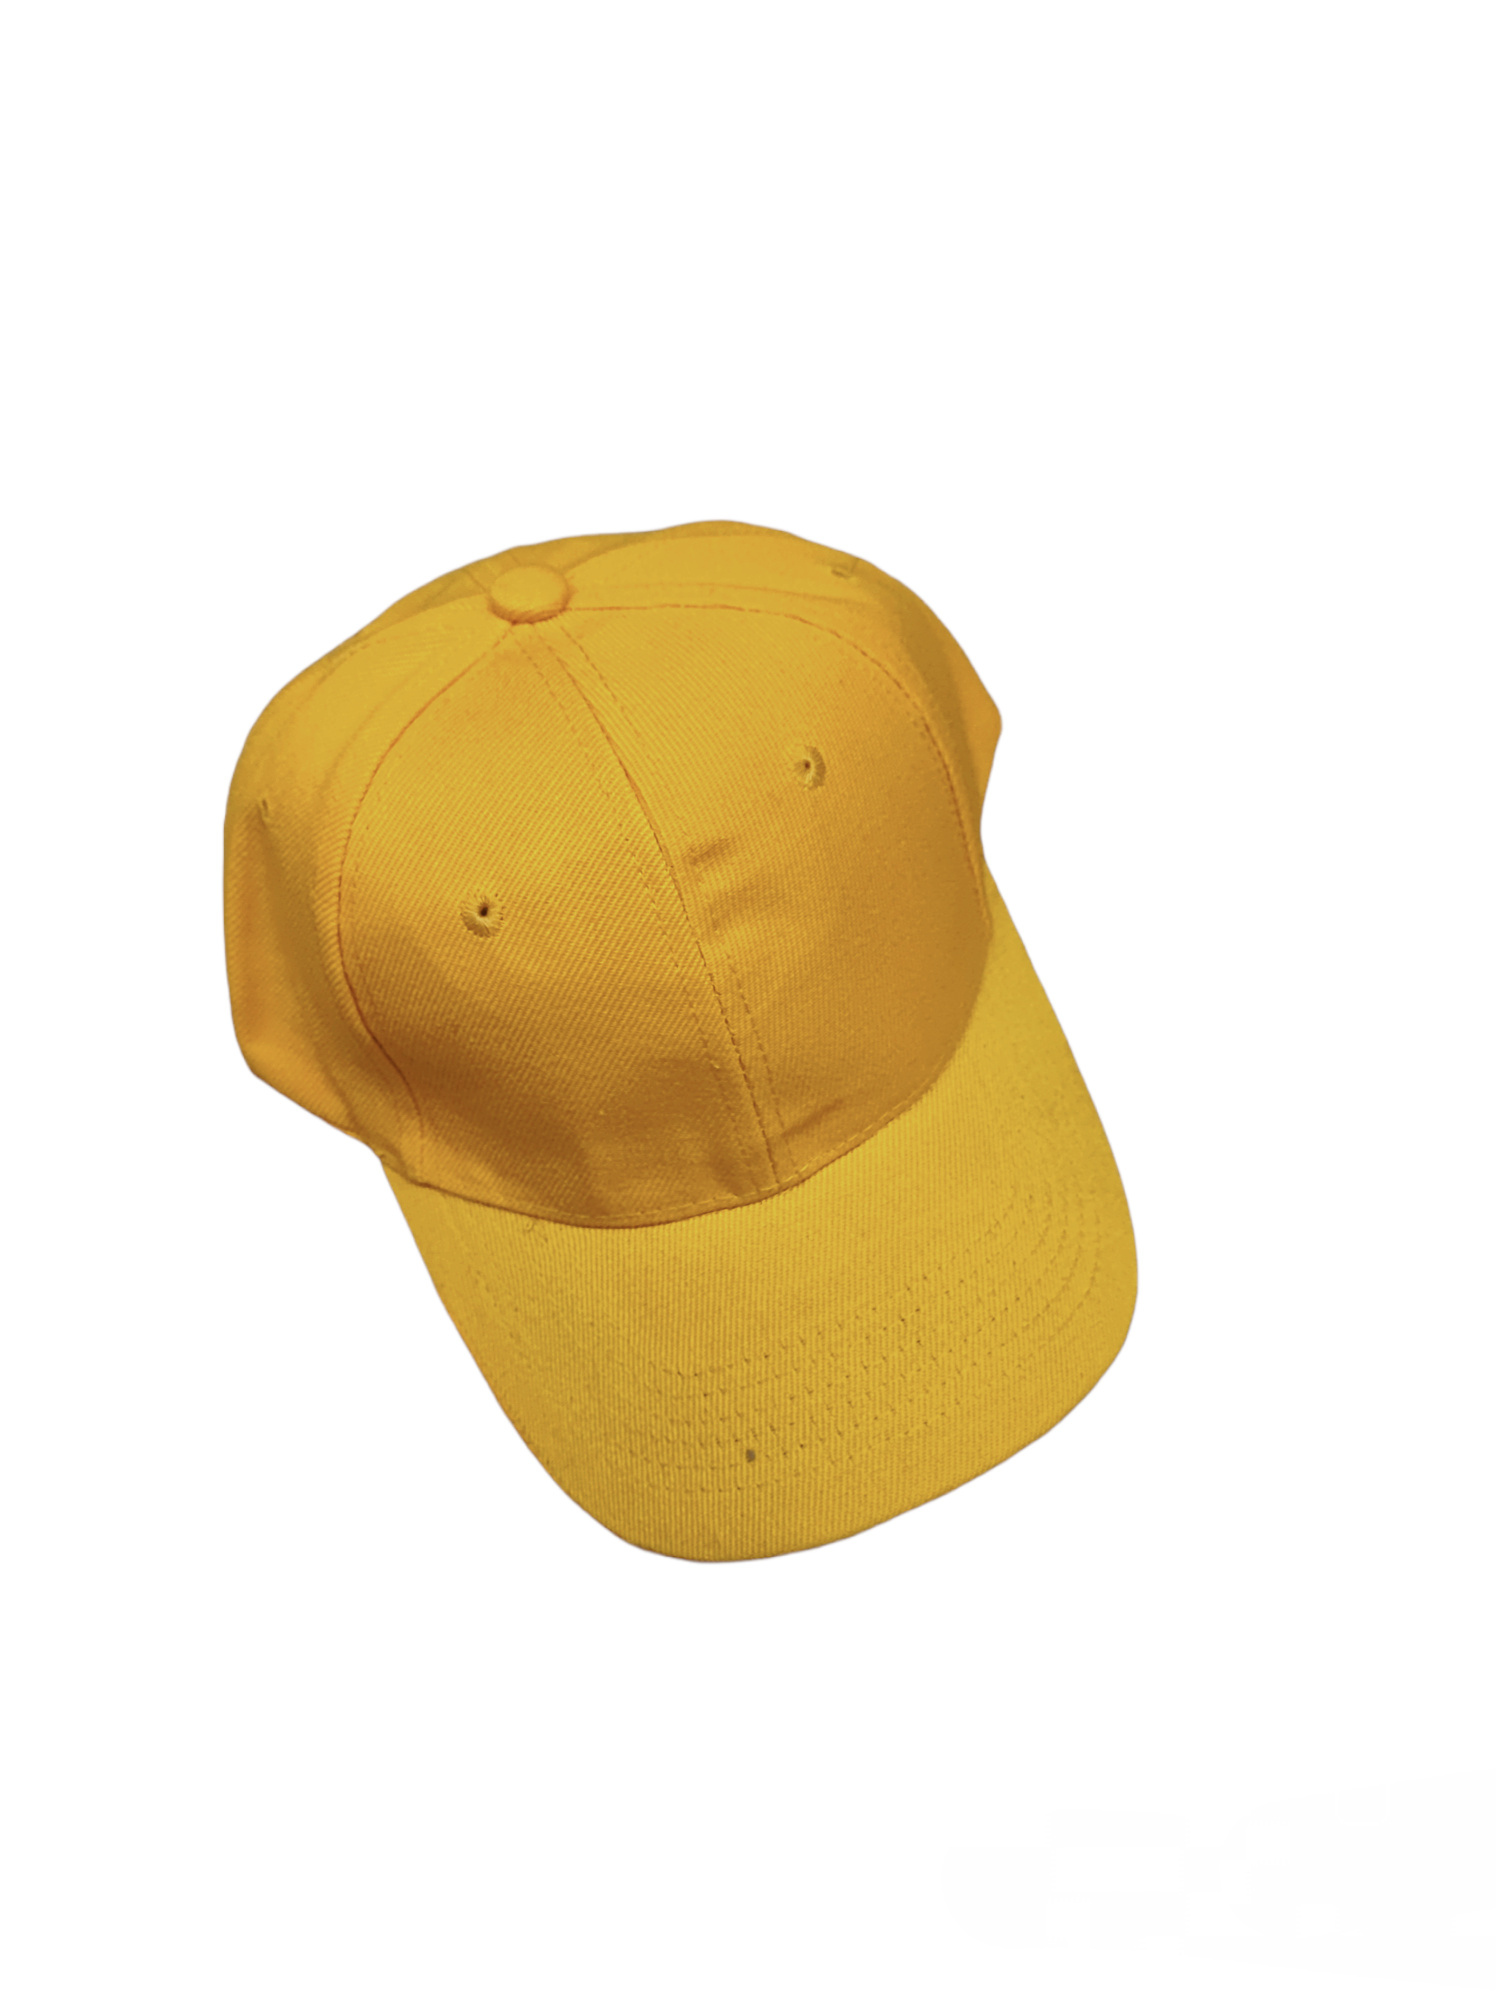 Casquette couleur unie jaune  (x12)#15